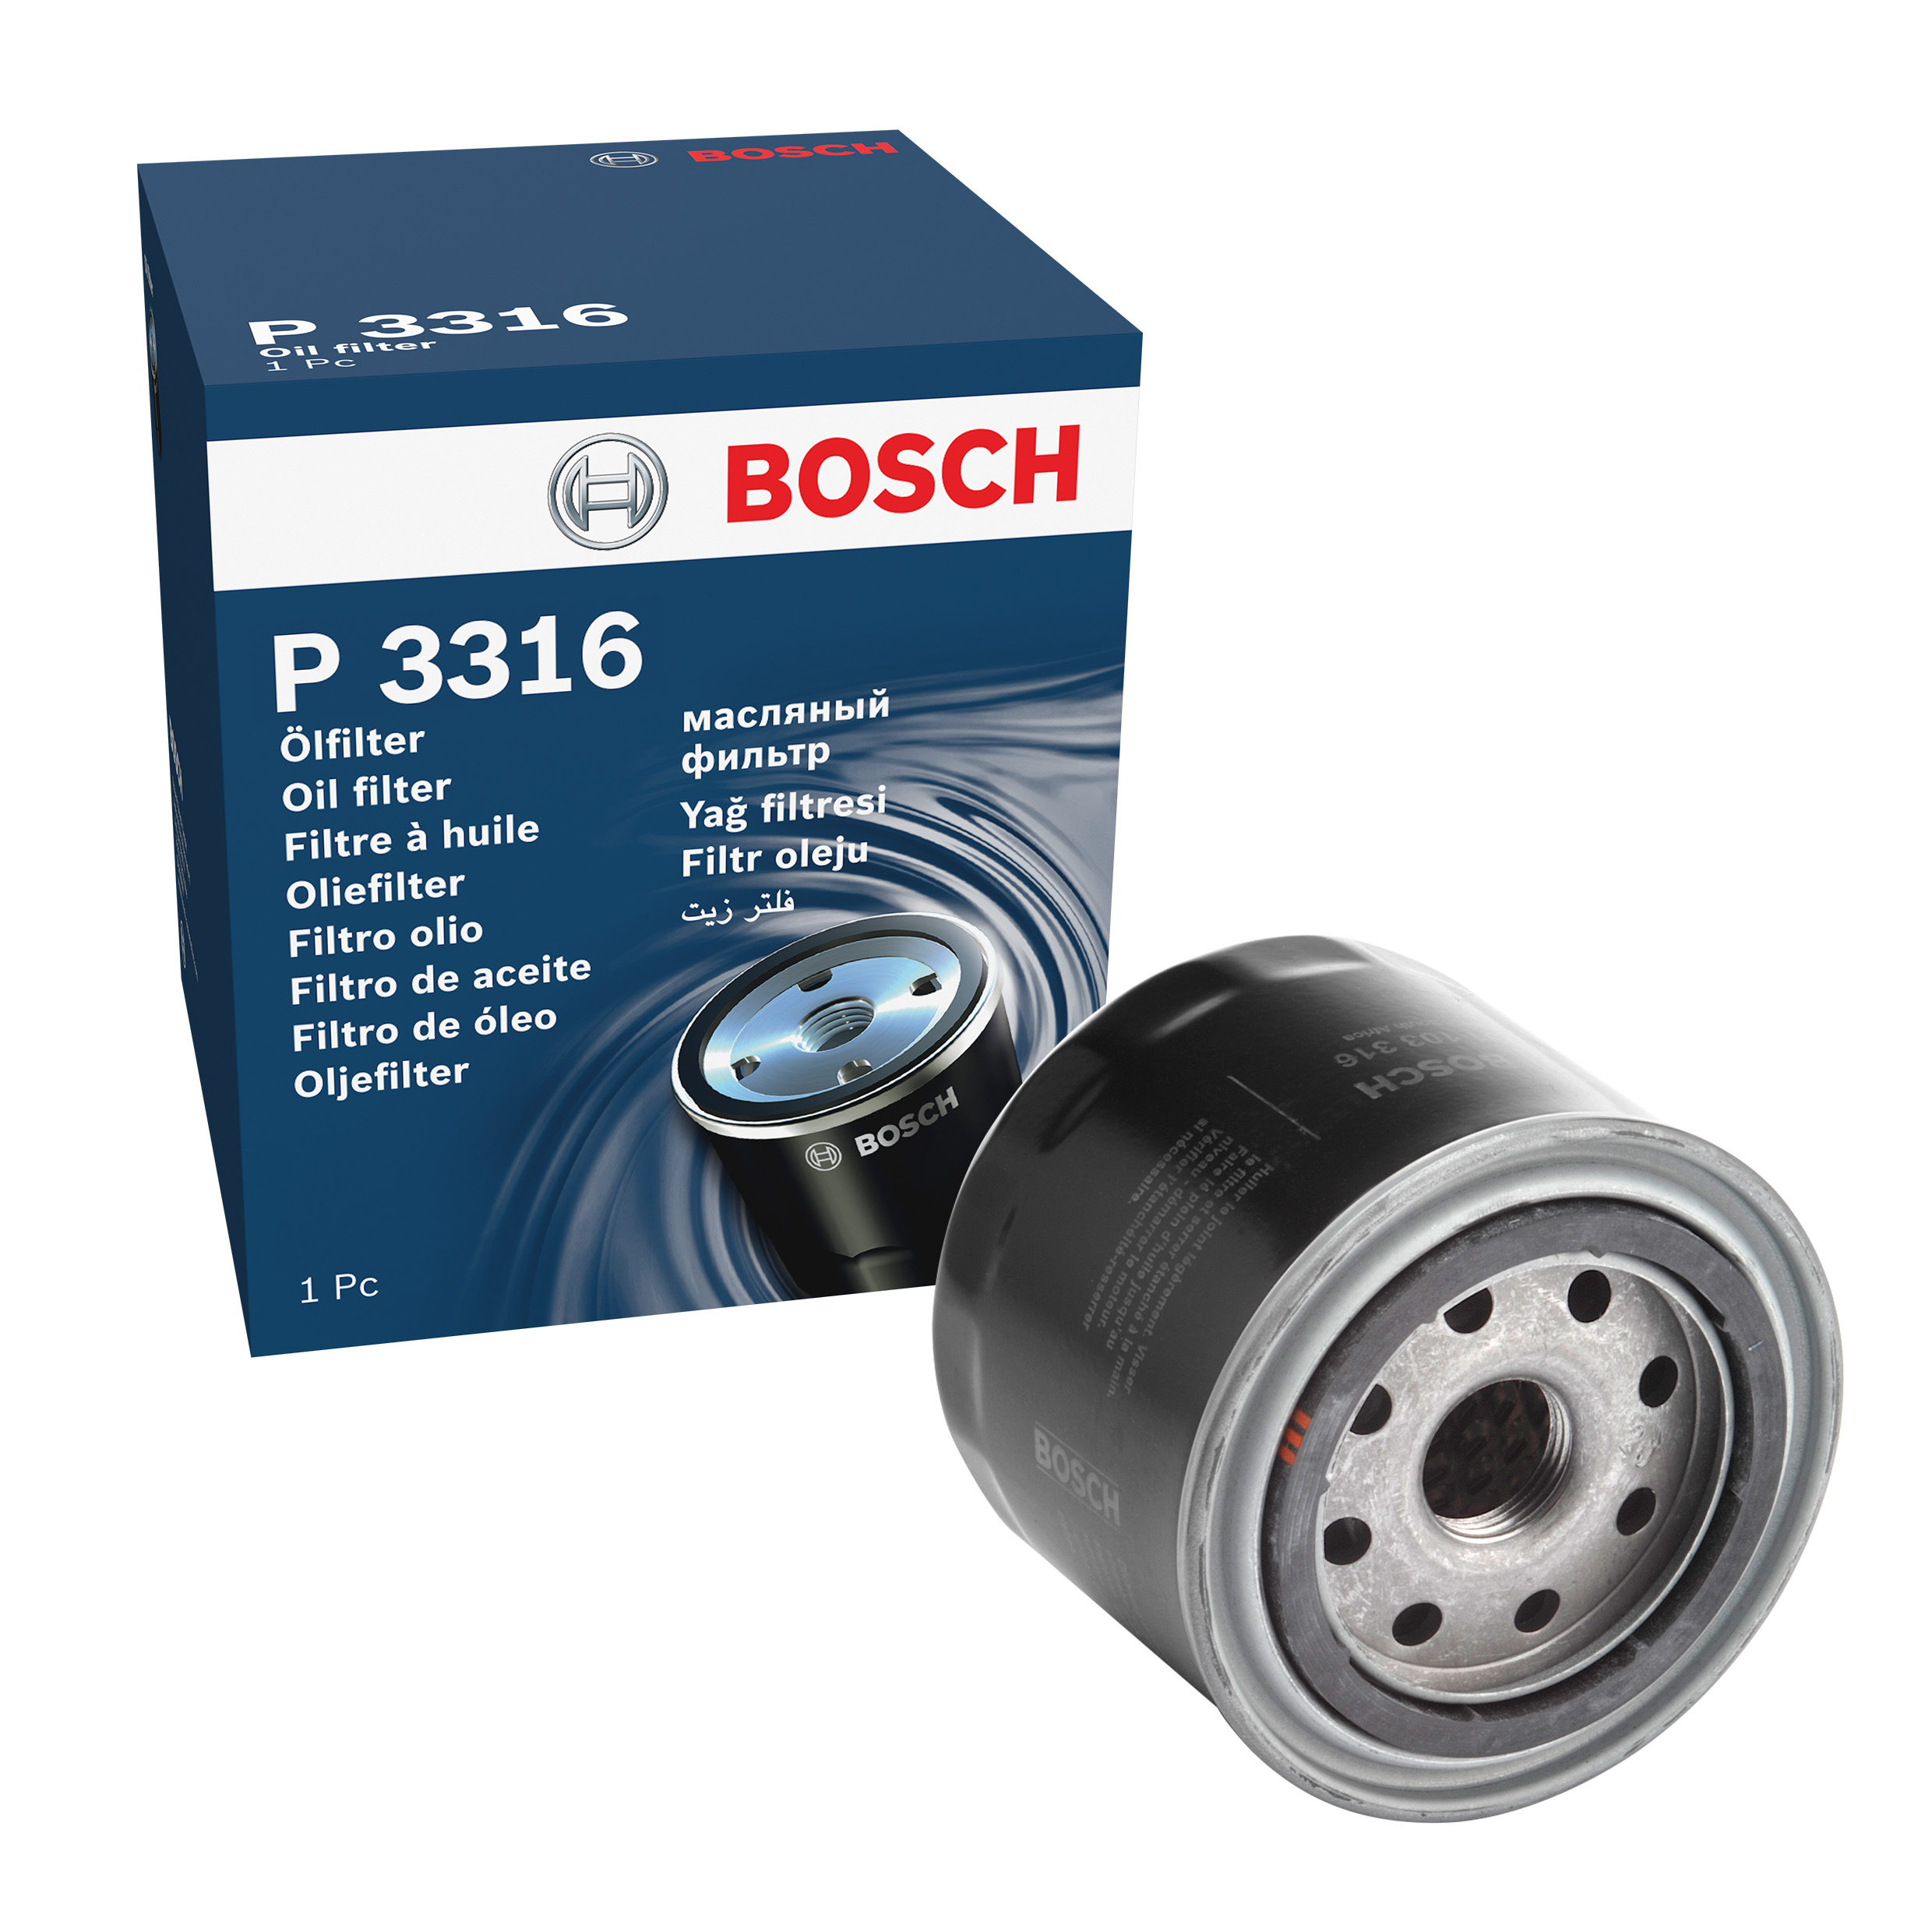 Oil Filter P3316 Bosch Oil filters